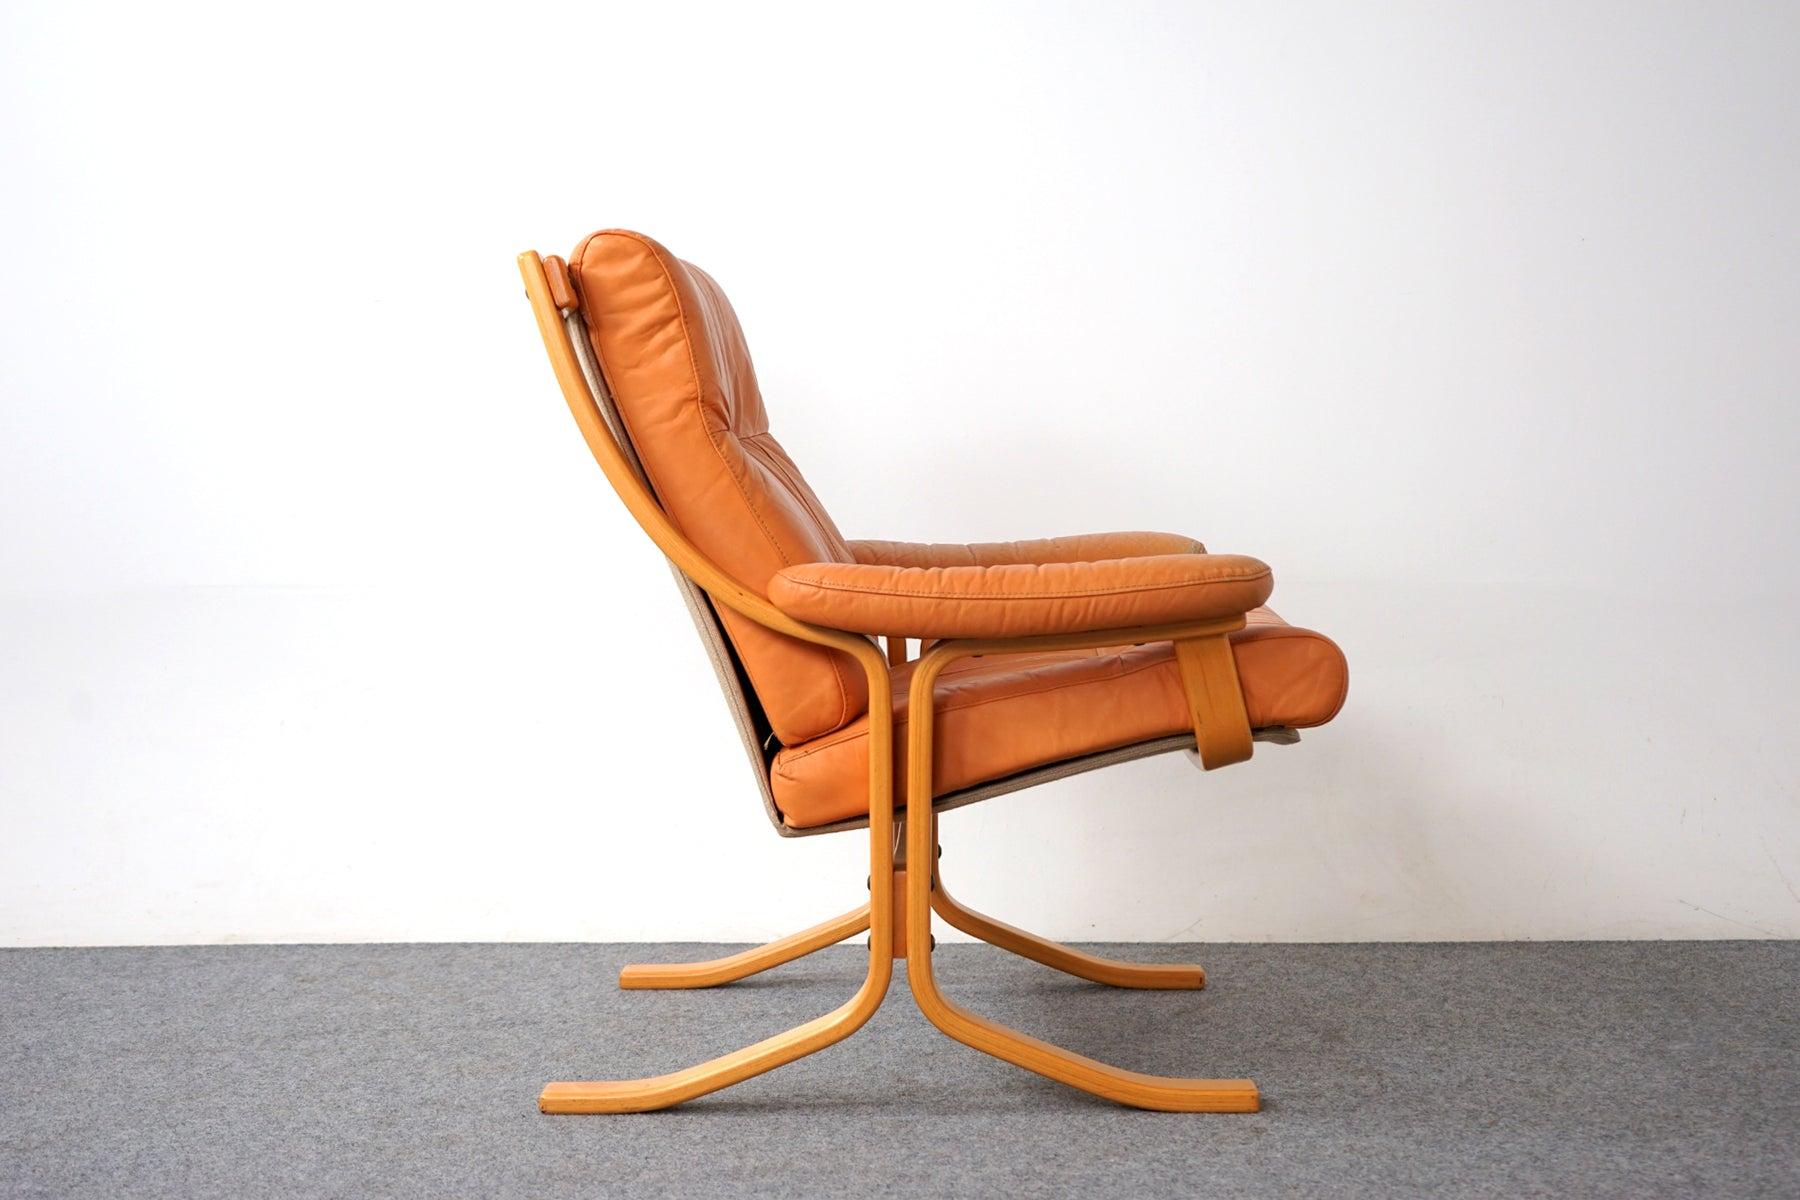 Late 20th Century Scandinavian Mid-Century Modern Beech & Leather Easy Chair by Ekornes